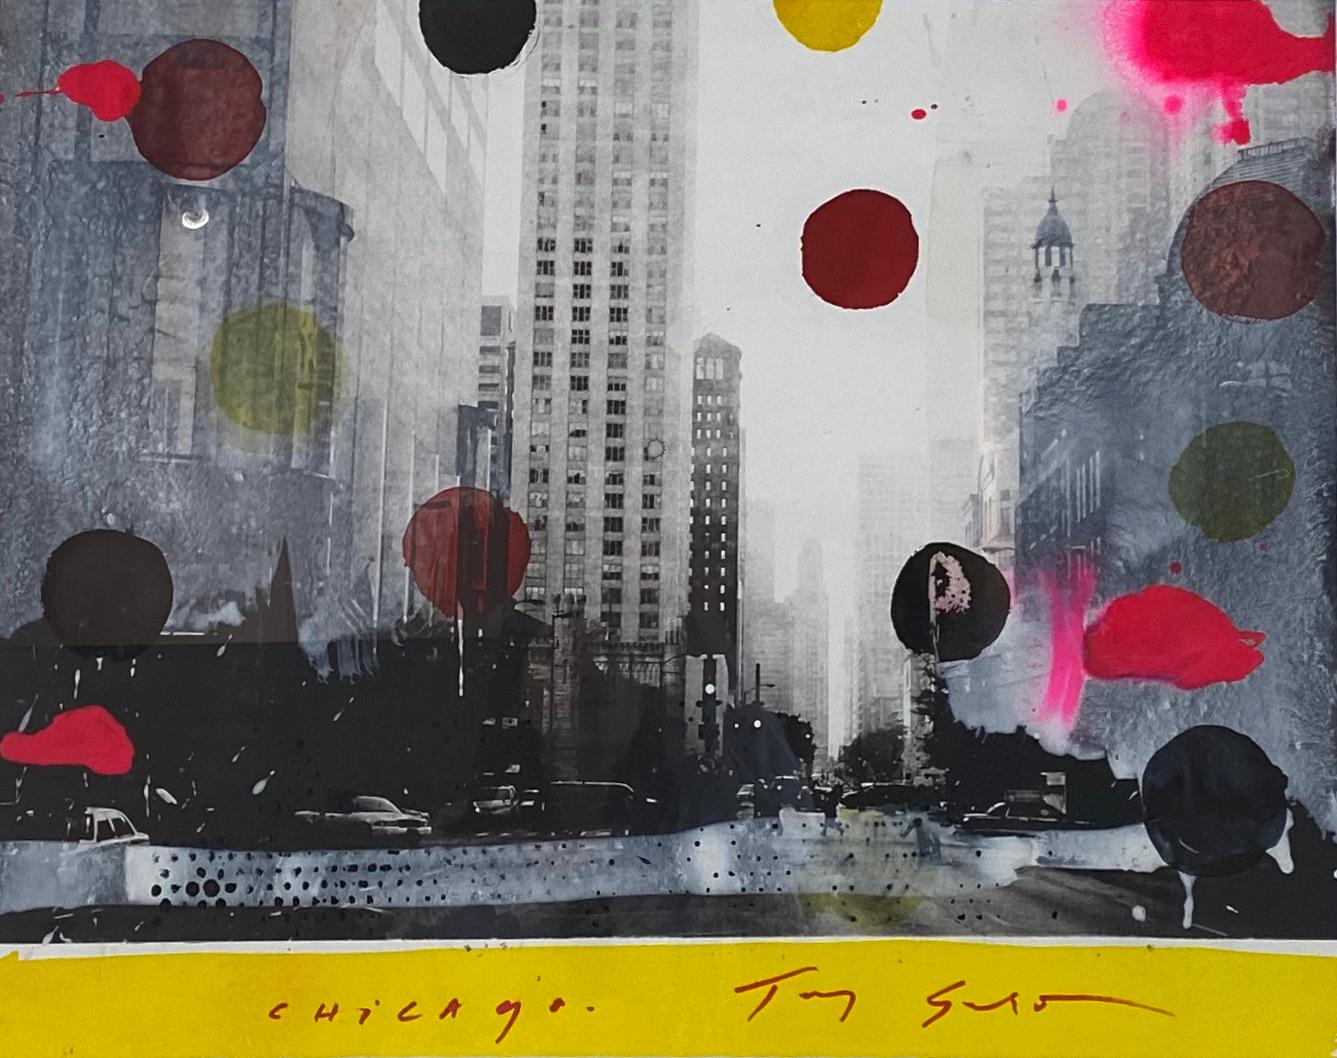 "Chicago" by Tony Soulié (20x20in), 2019